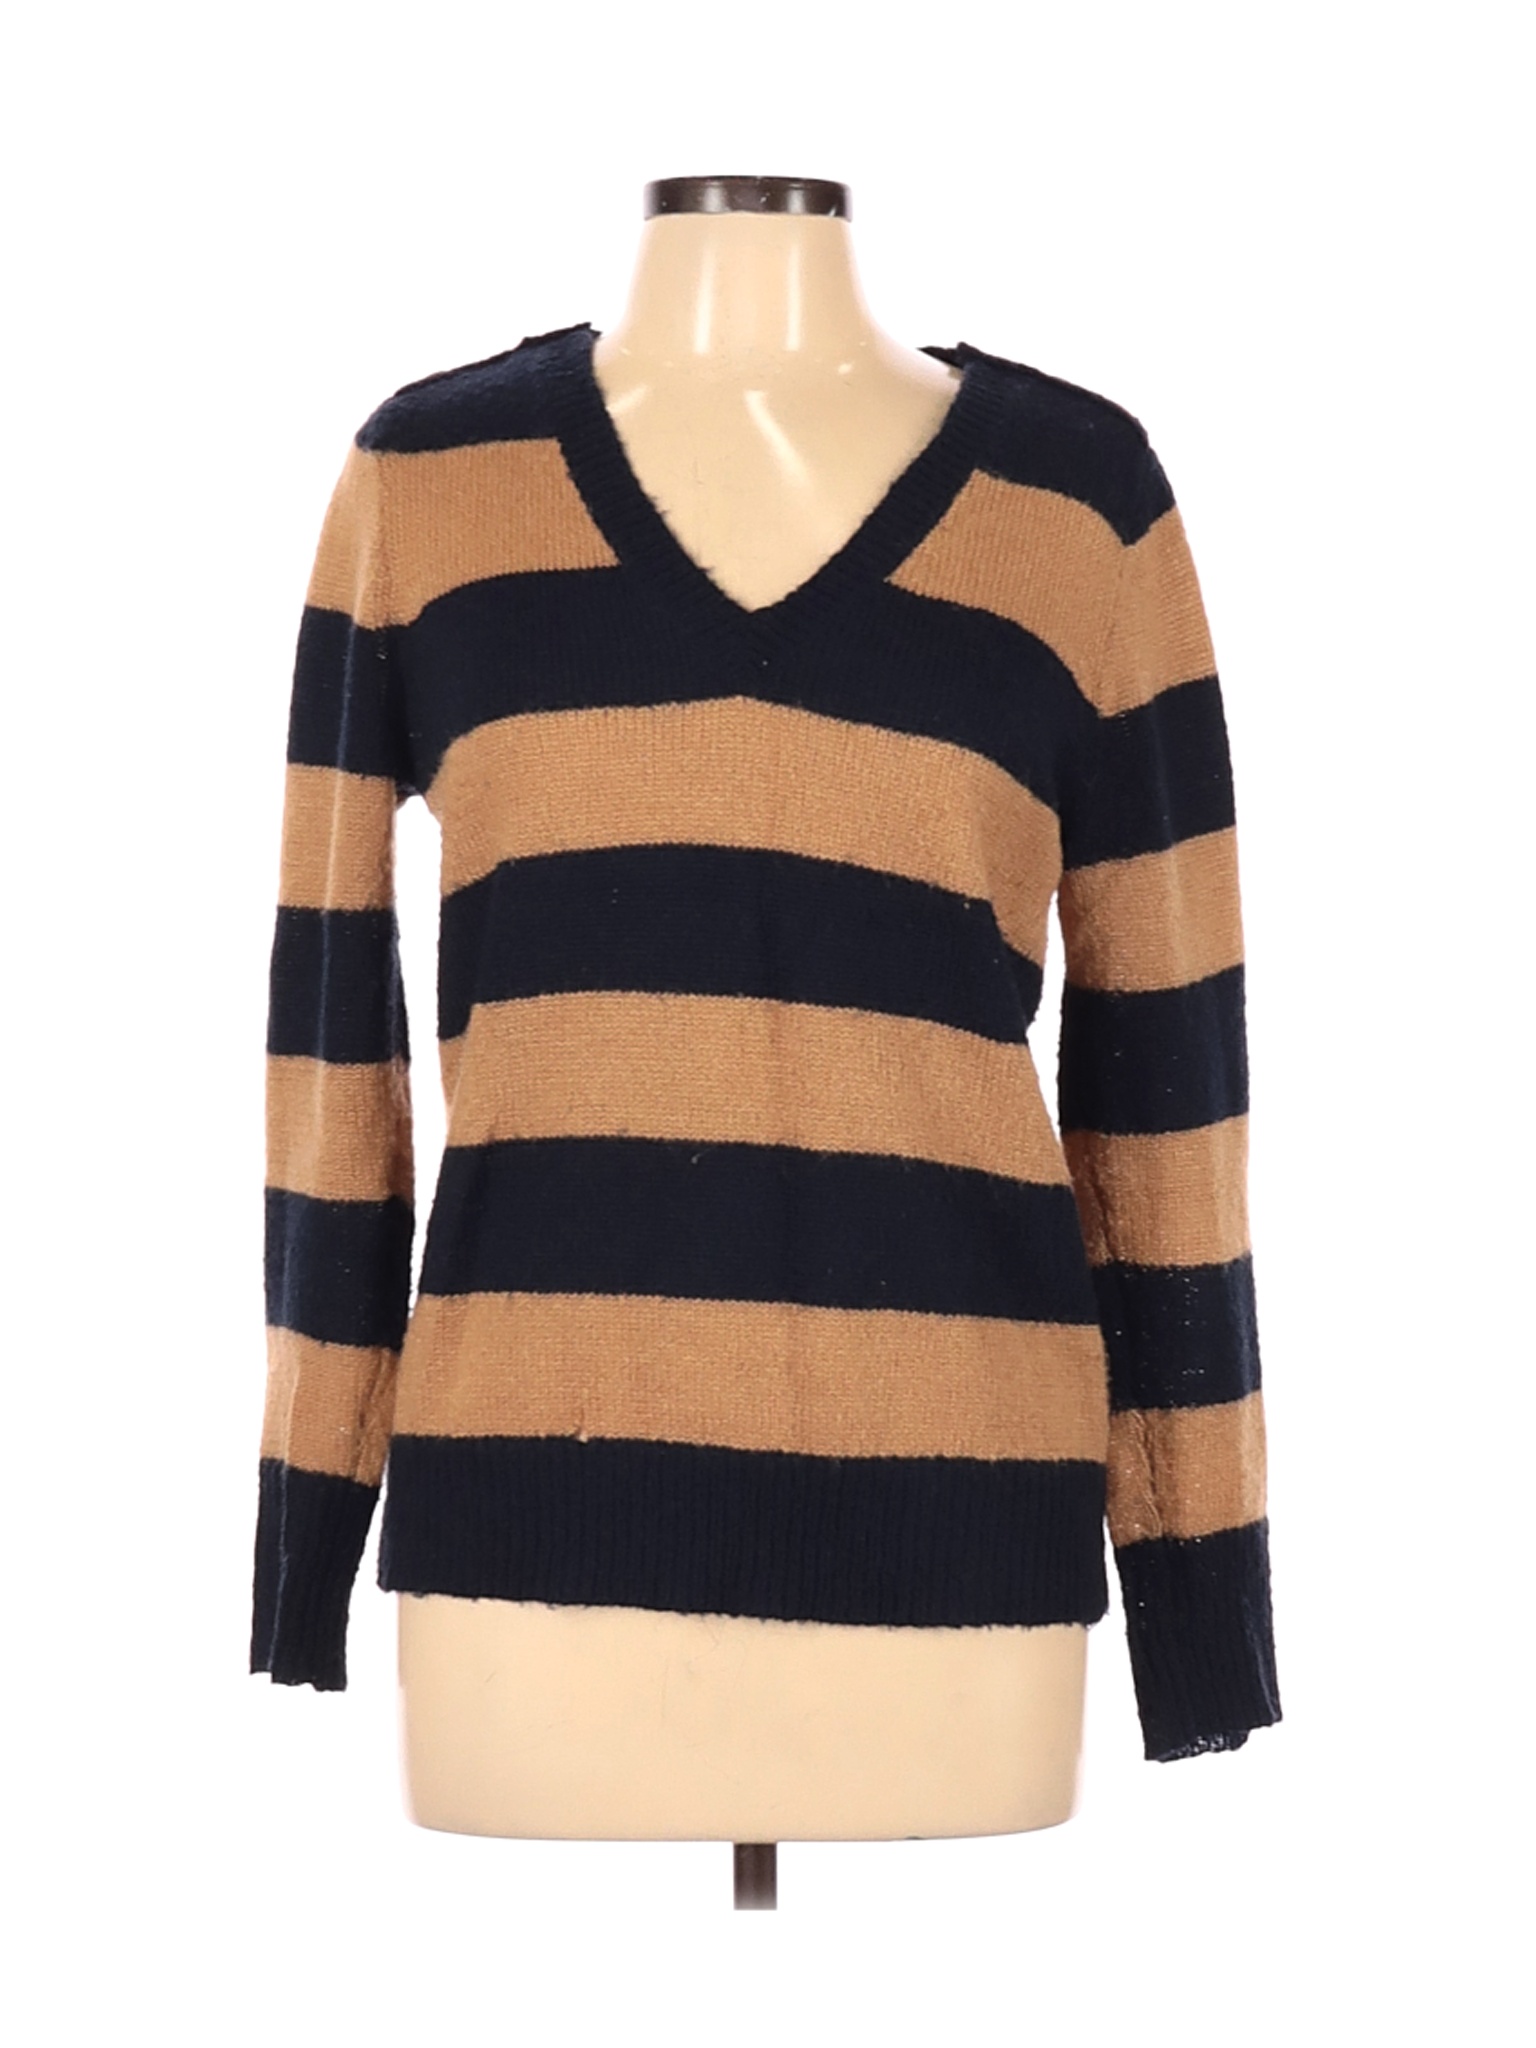 J.Crew Women Brown Pullover Sweater L | eBay